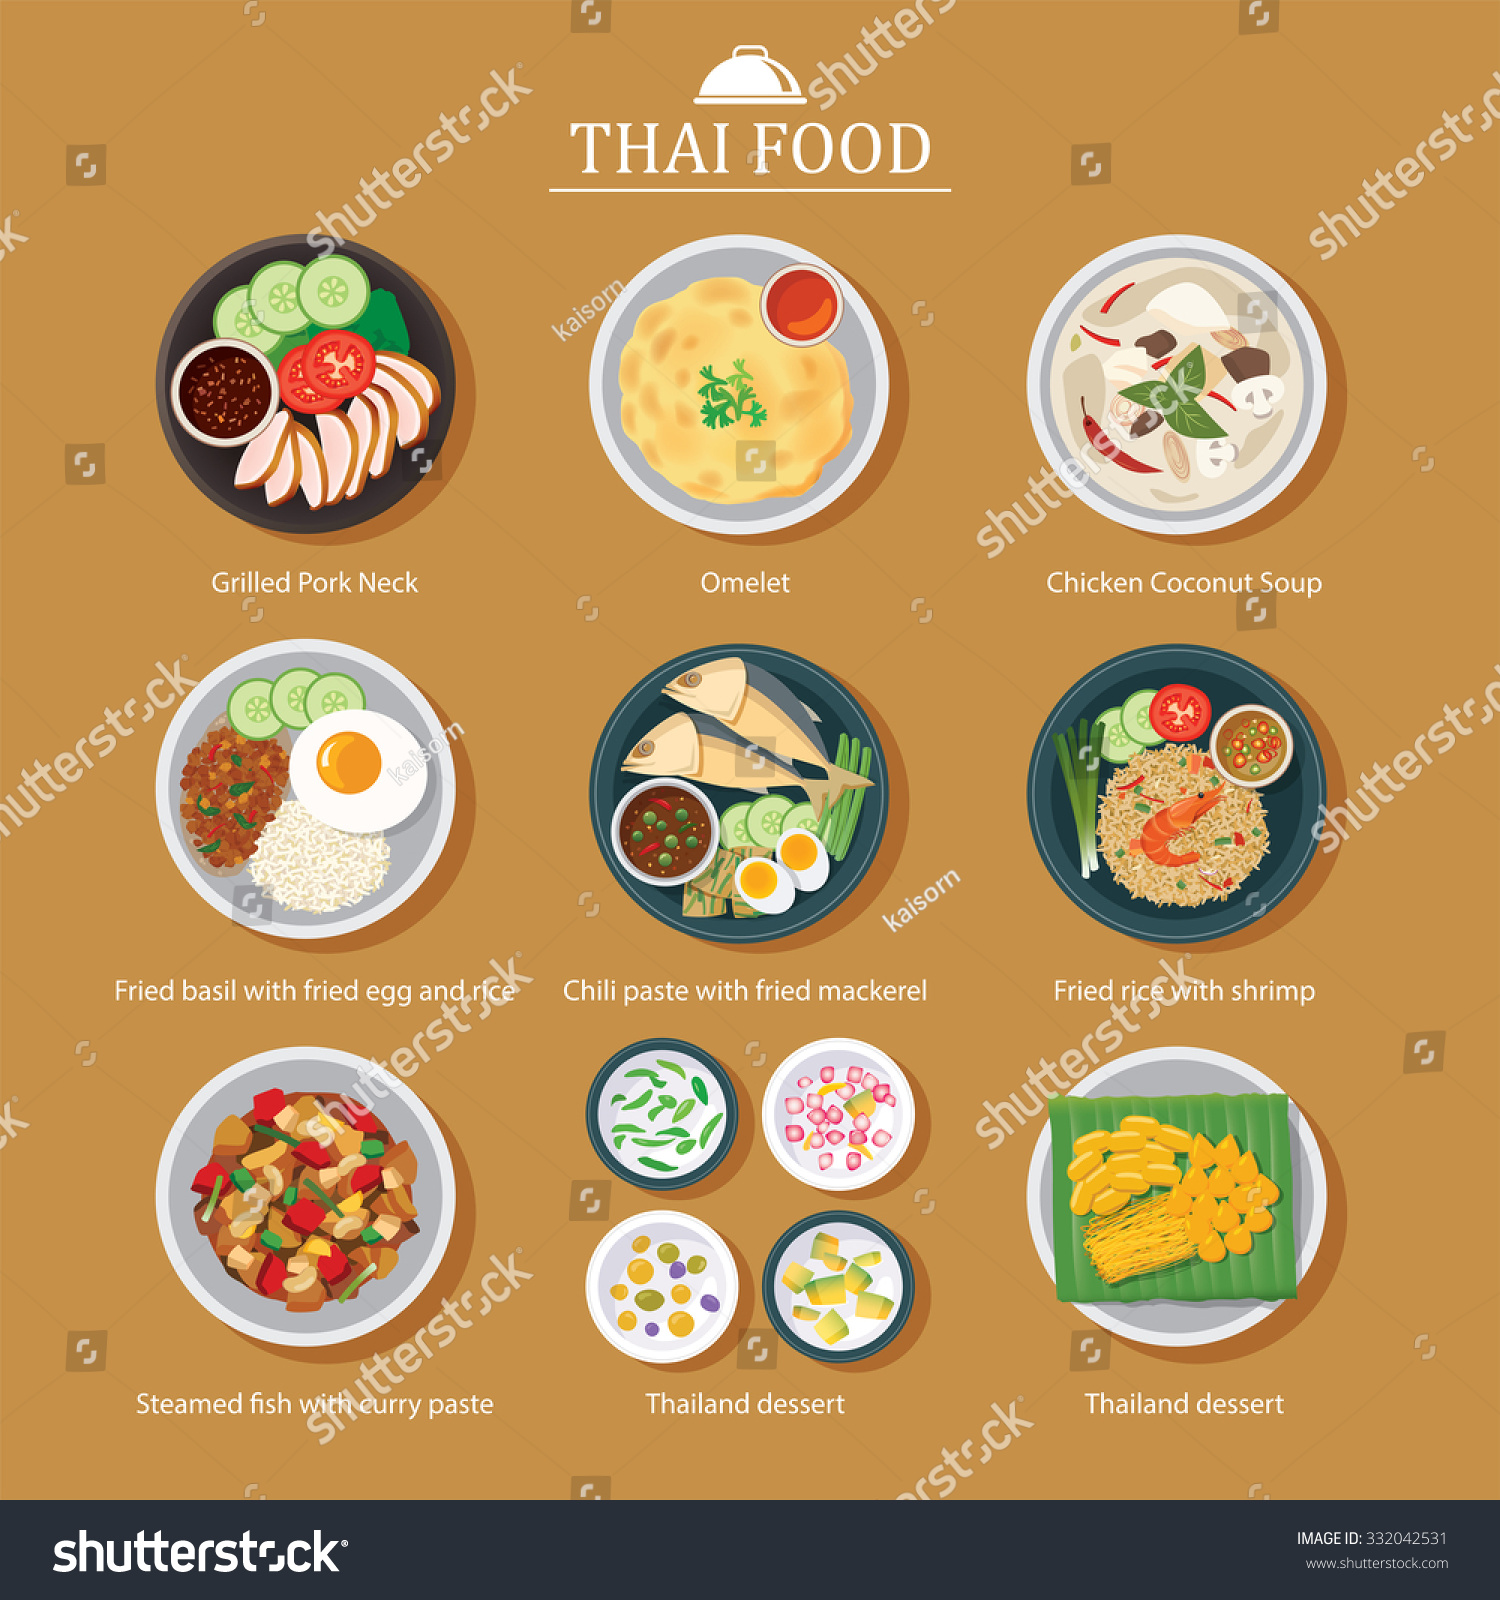 1,819,201 Thailand food Images, Stock Photos & Vectors | Shutterstock